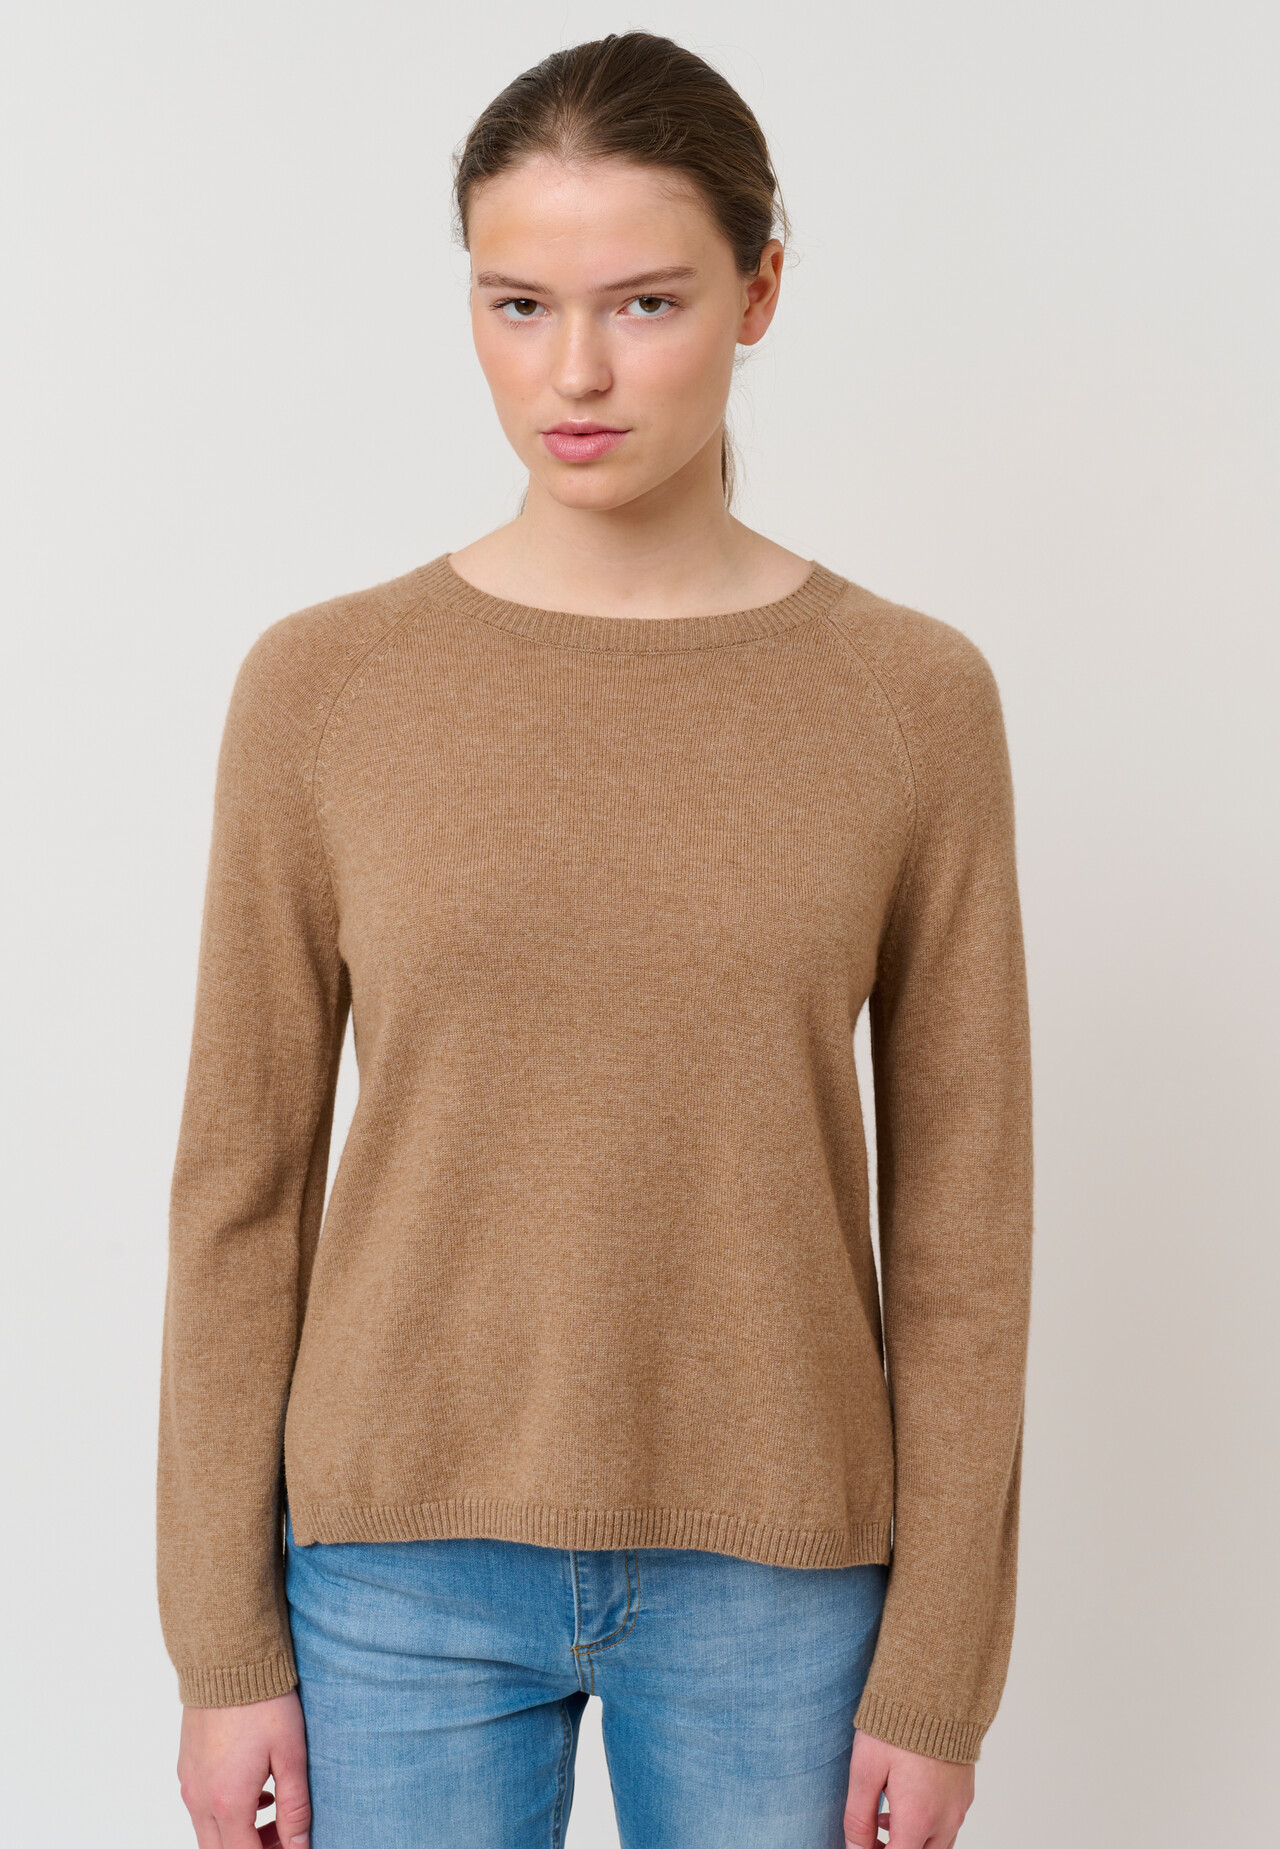 CRÉTON CRLinea kashmir sweater (140 CM S)